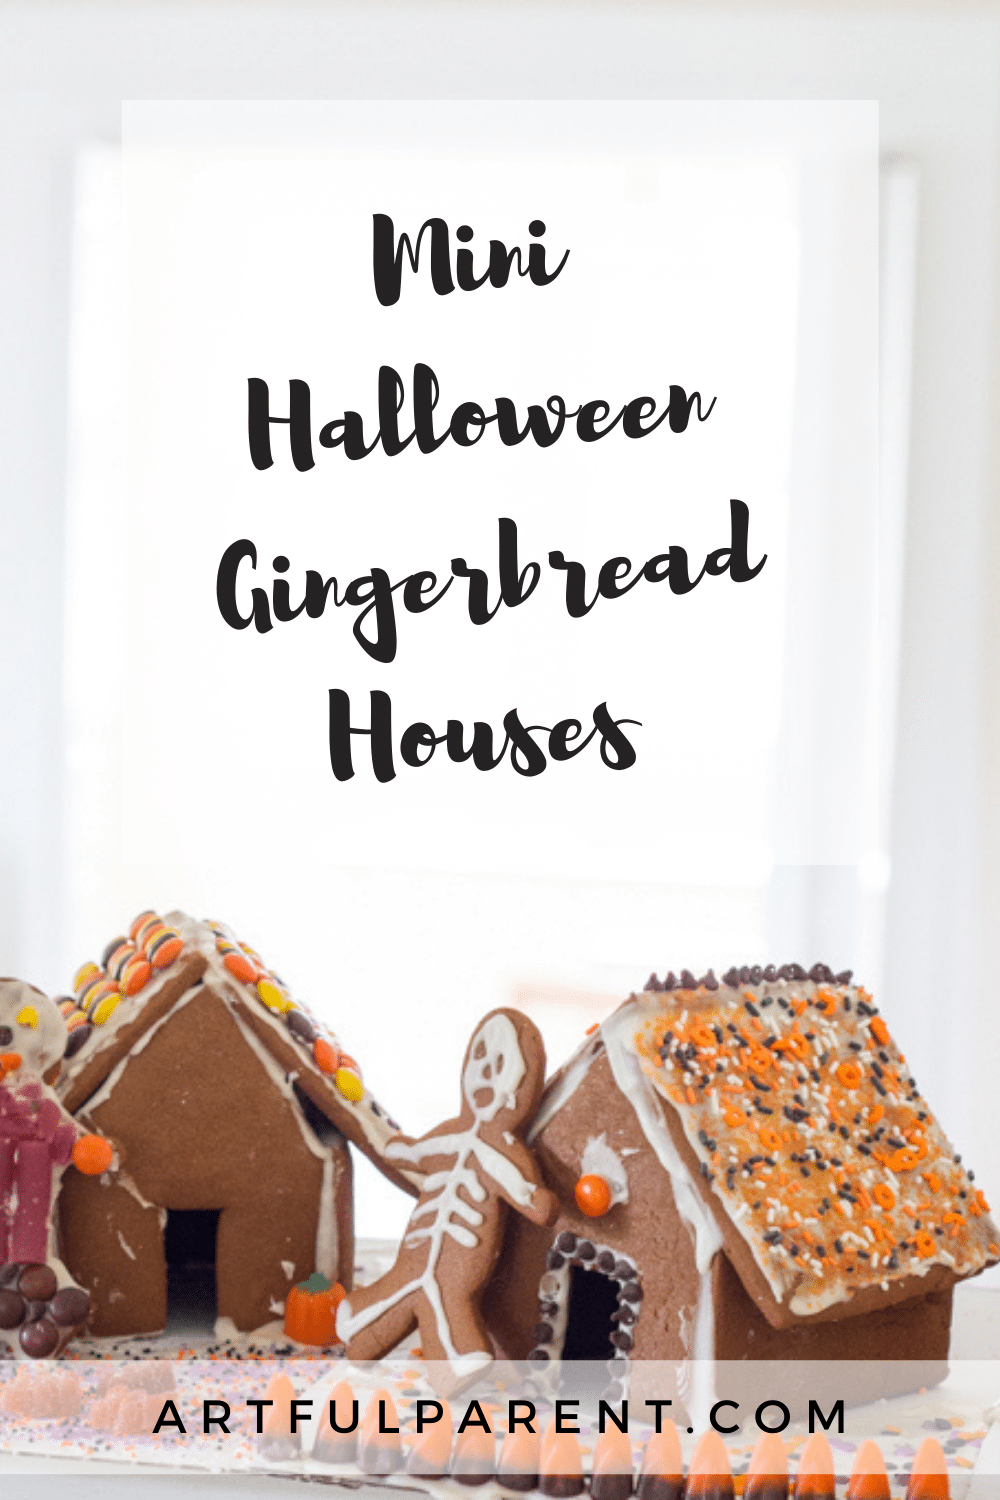 How to Make a Mini Halloween Gingerbread House